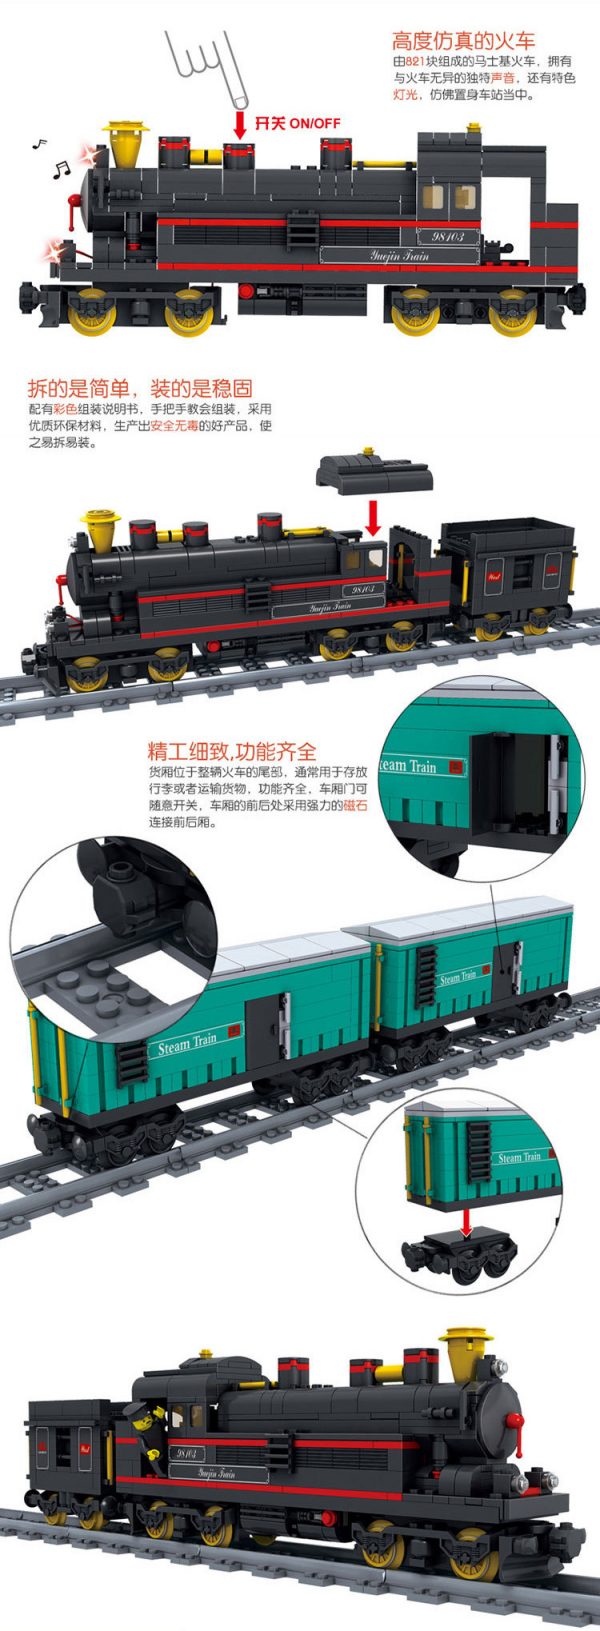 KAZI / GBL / BOZHI KY98103 Rail Train: Leap Forward 2